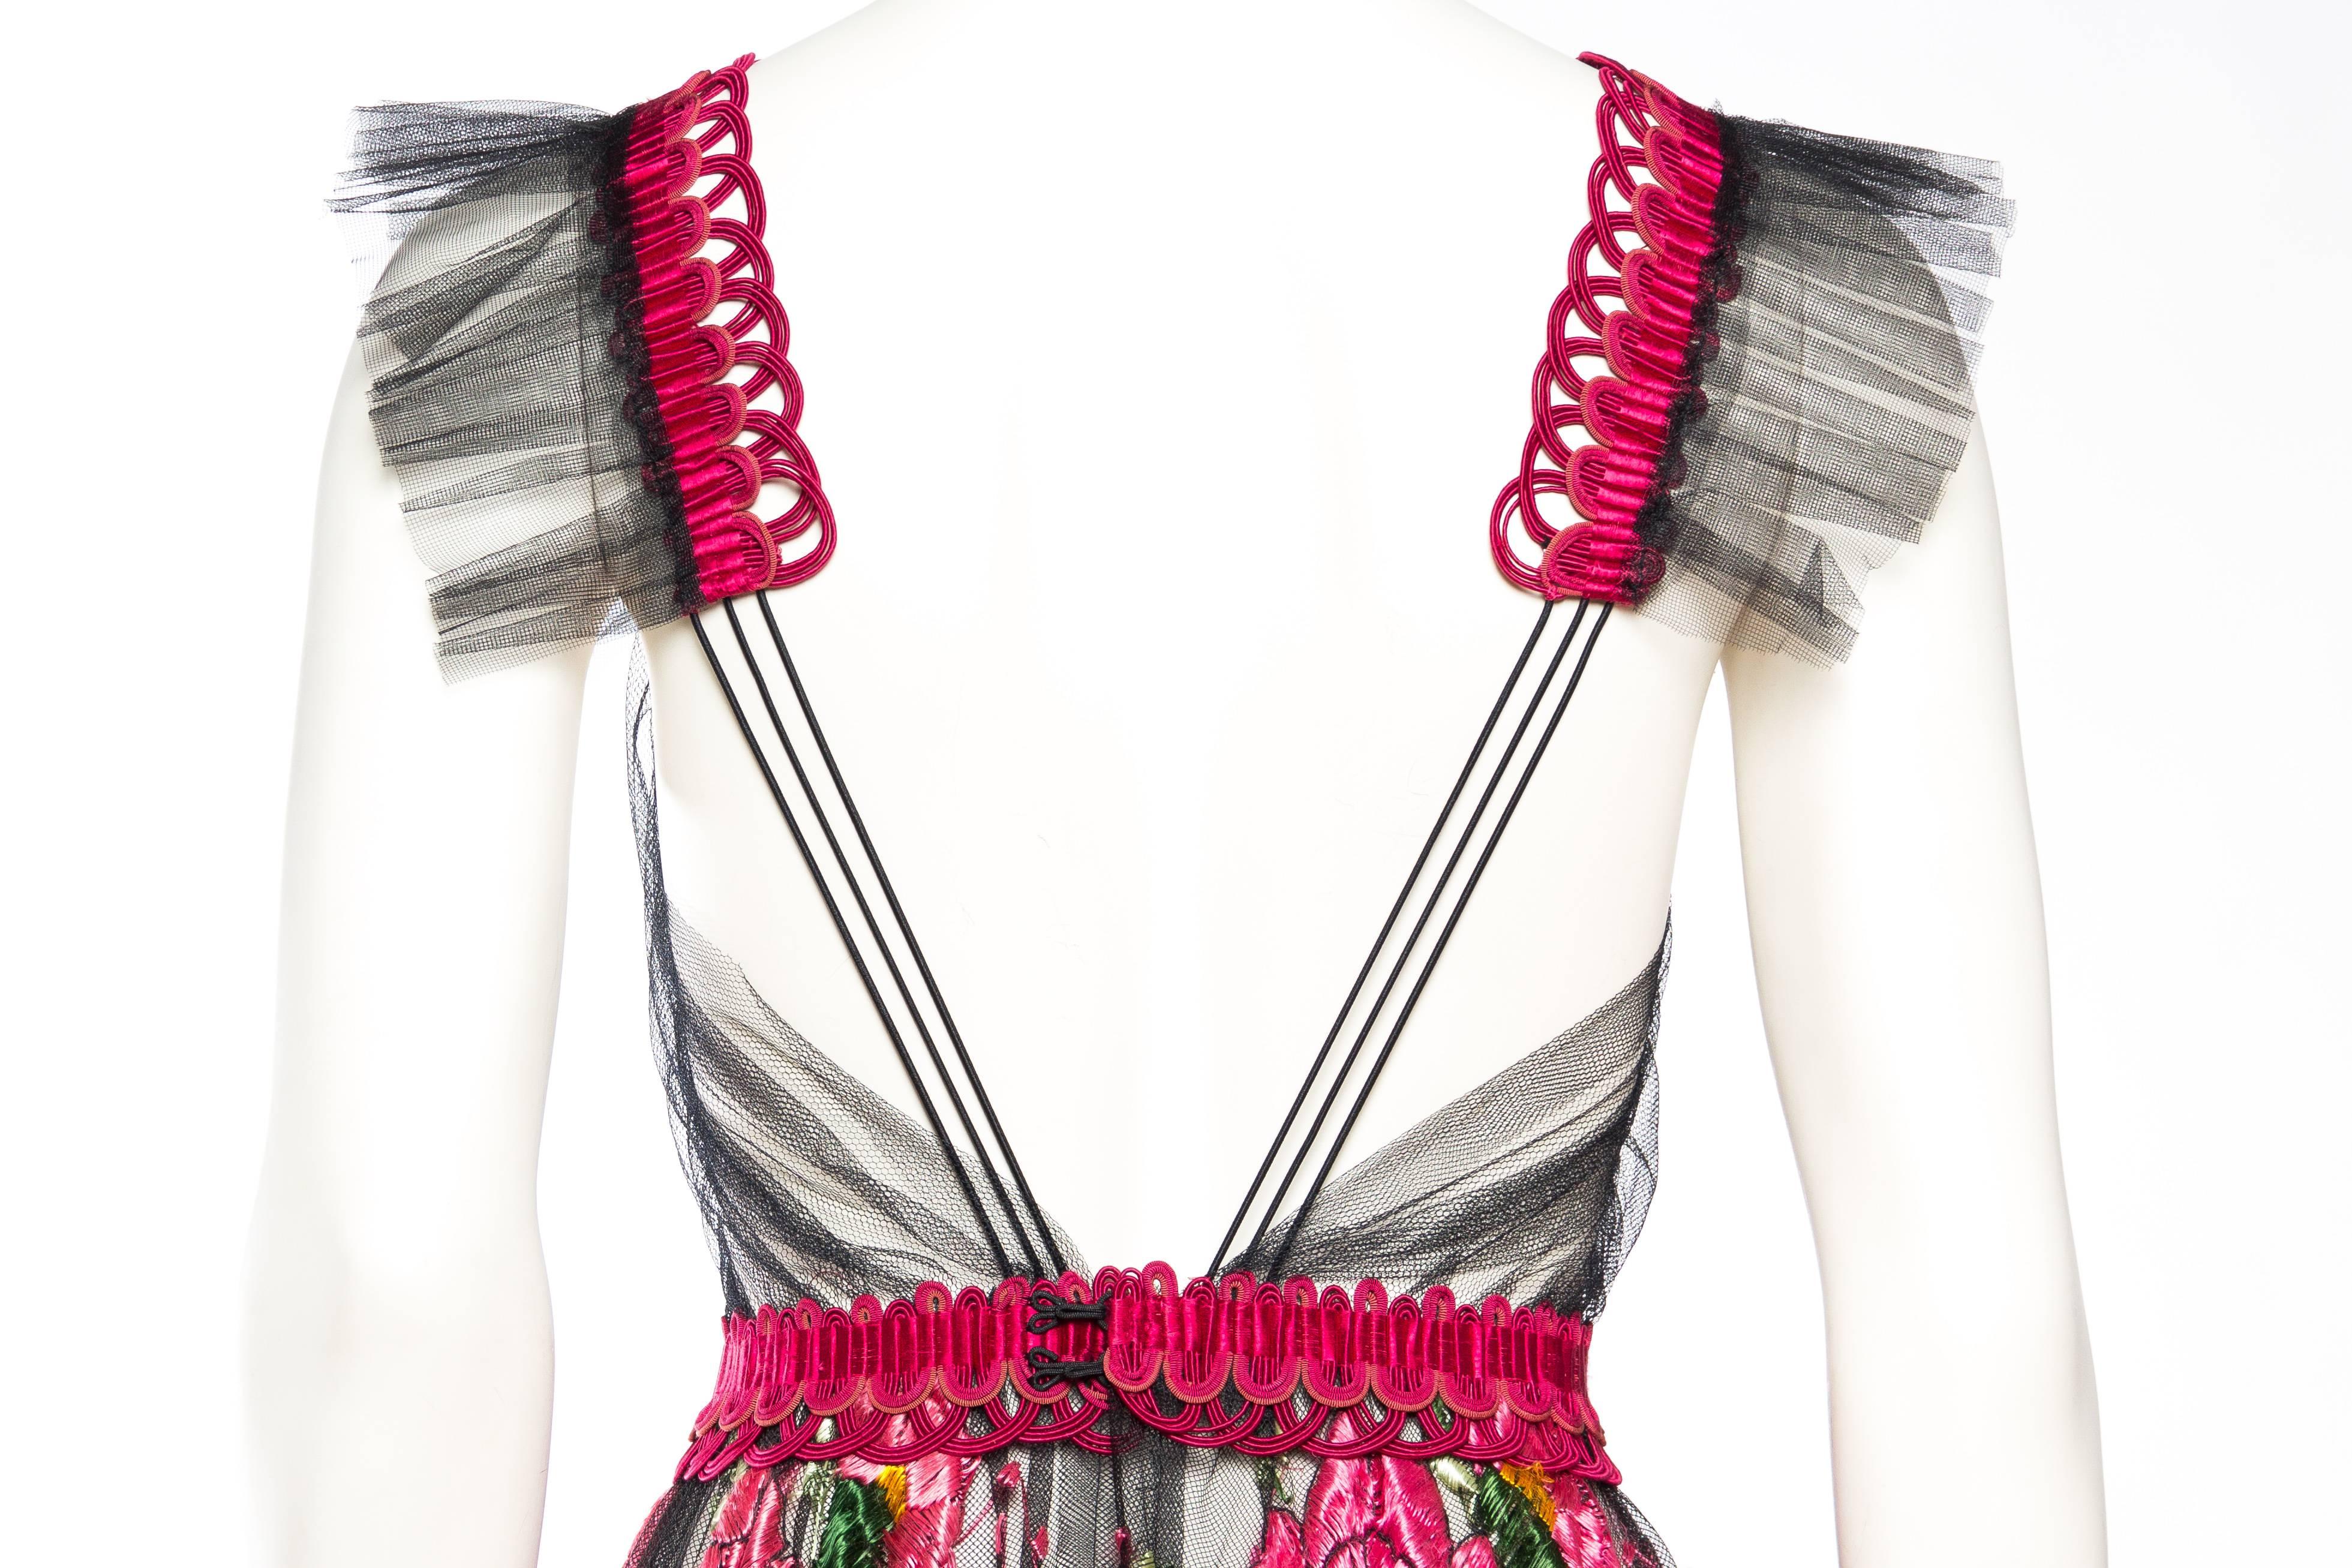 Bohemian Inspired Fully Embroidered Sheer Net Dress 2